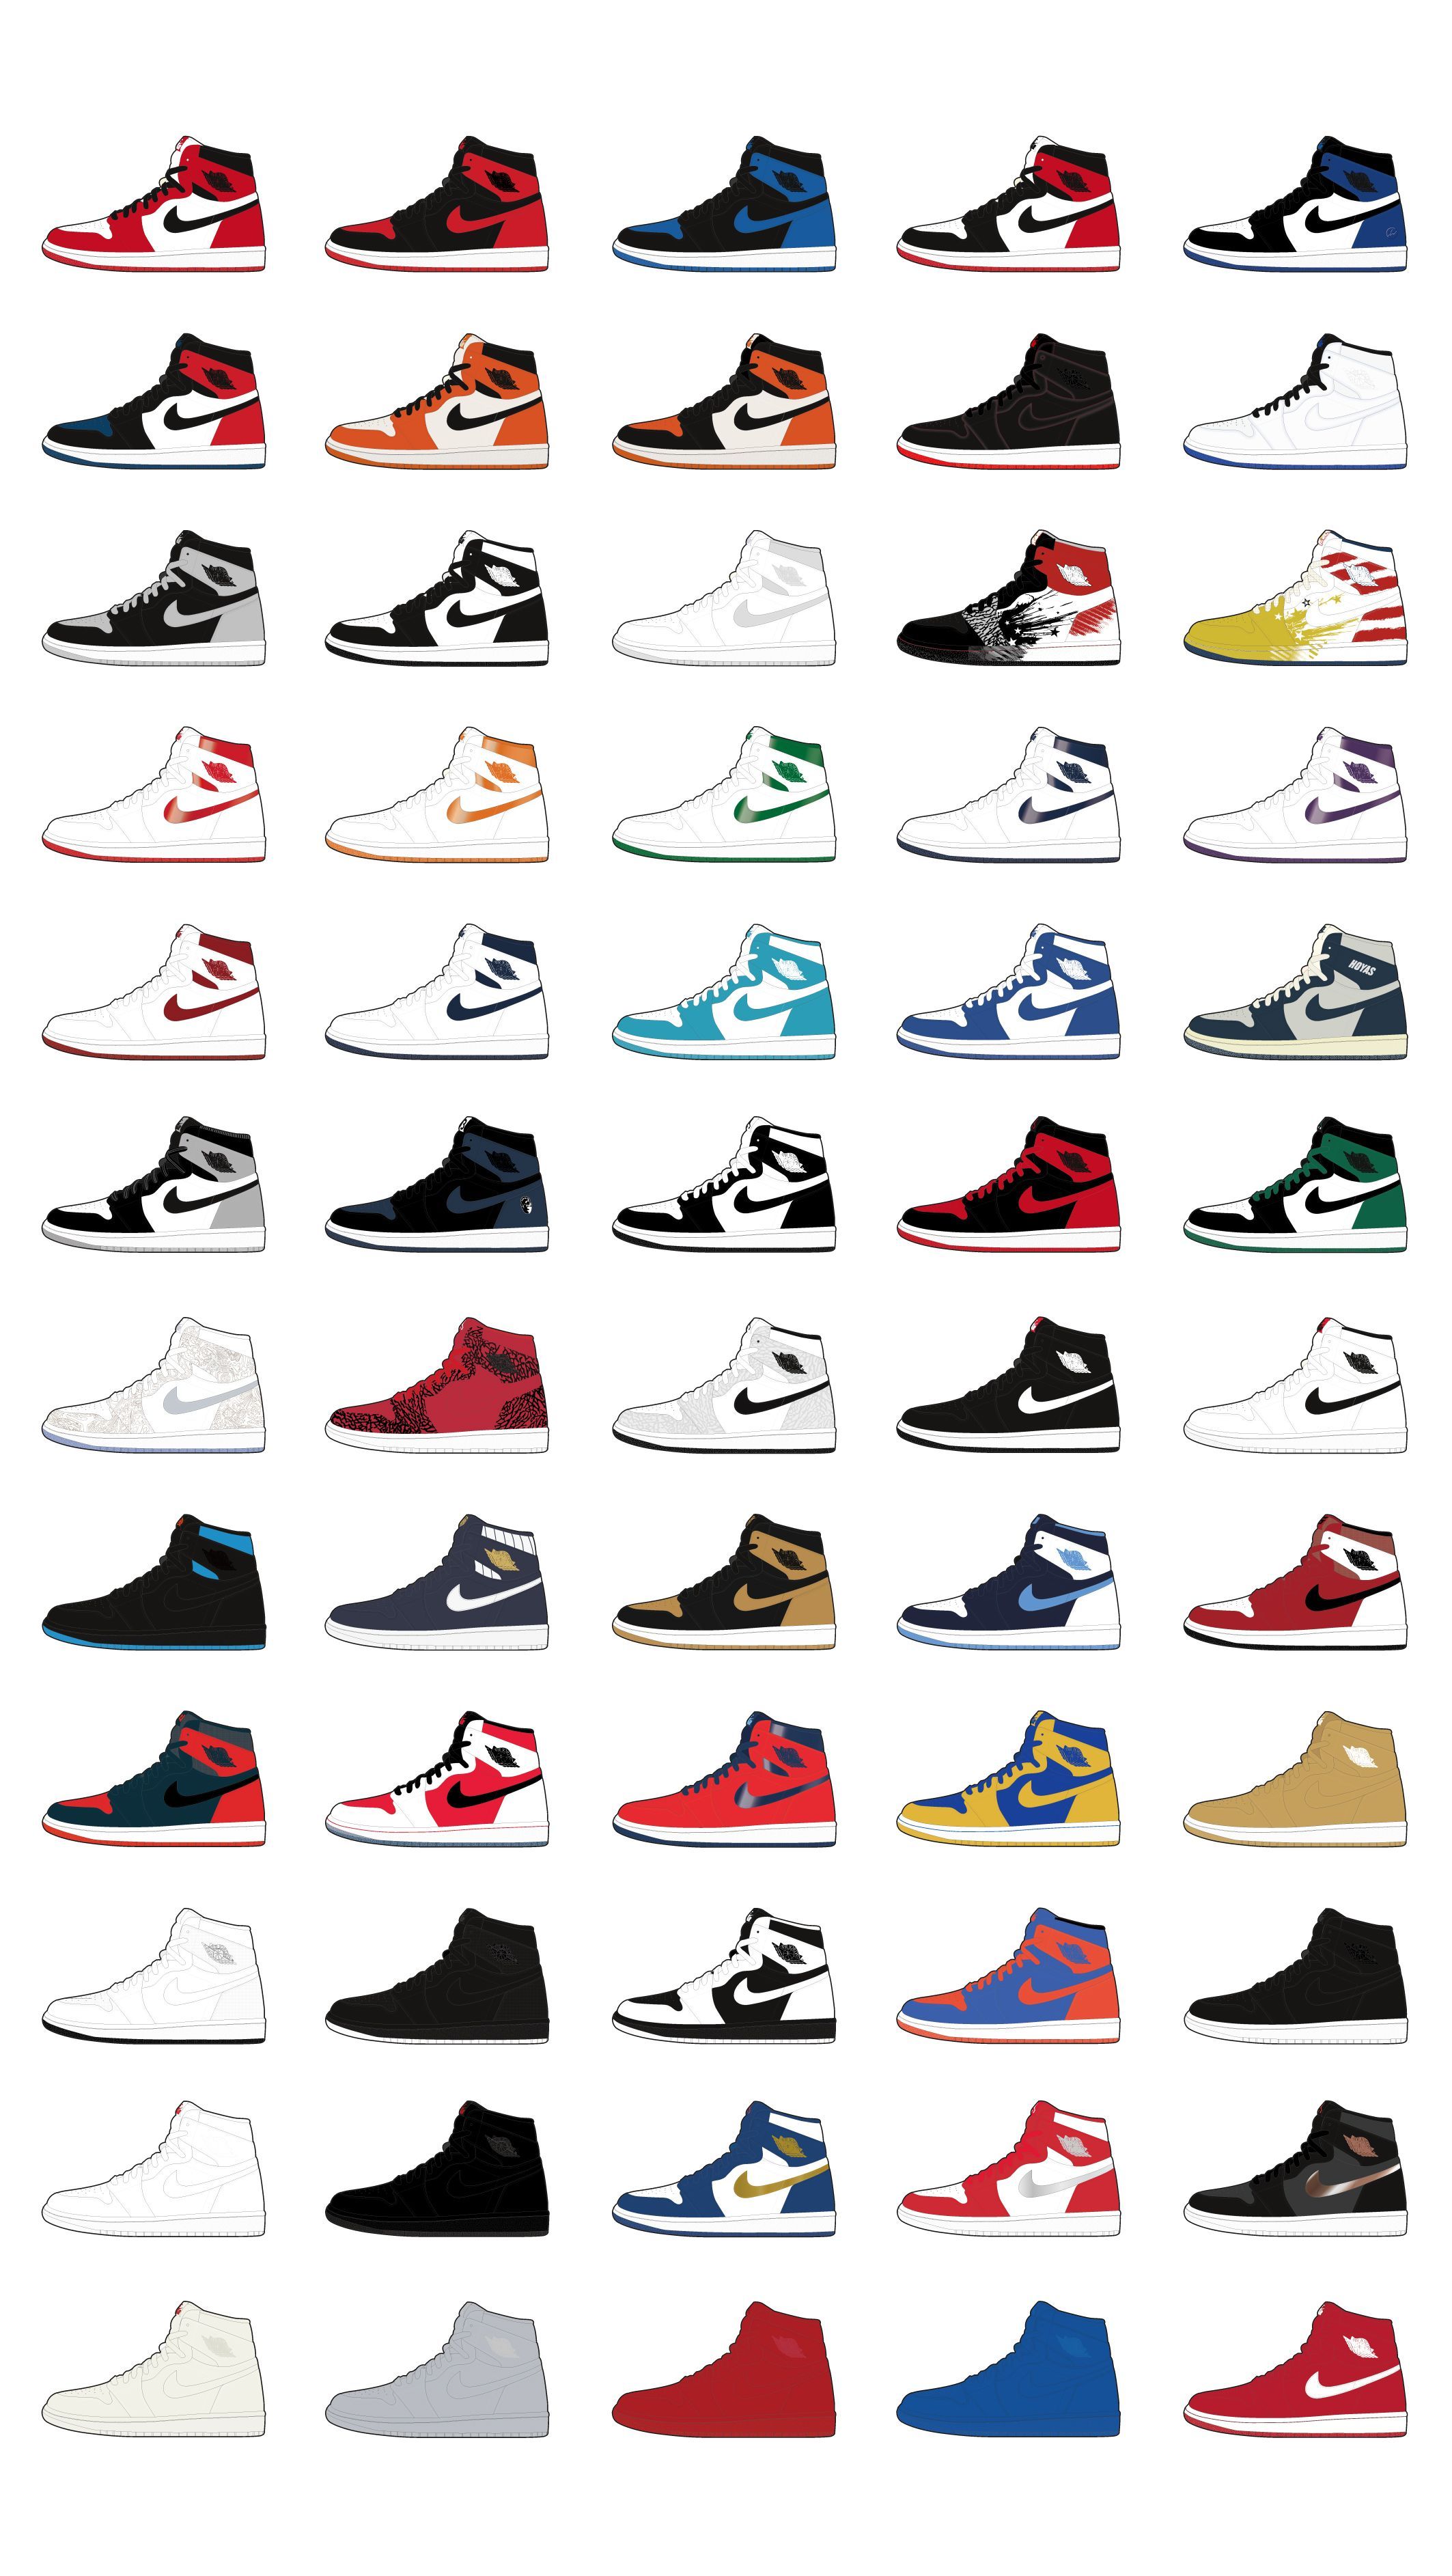 Sneakers wallpaper, Nike shoes jordans .com